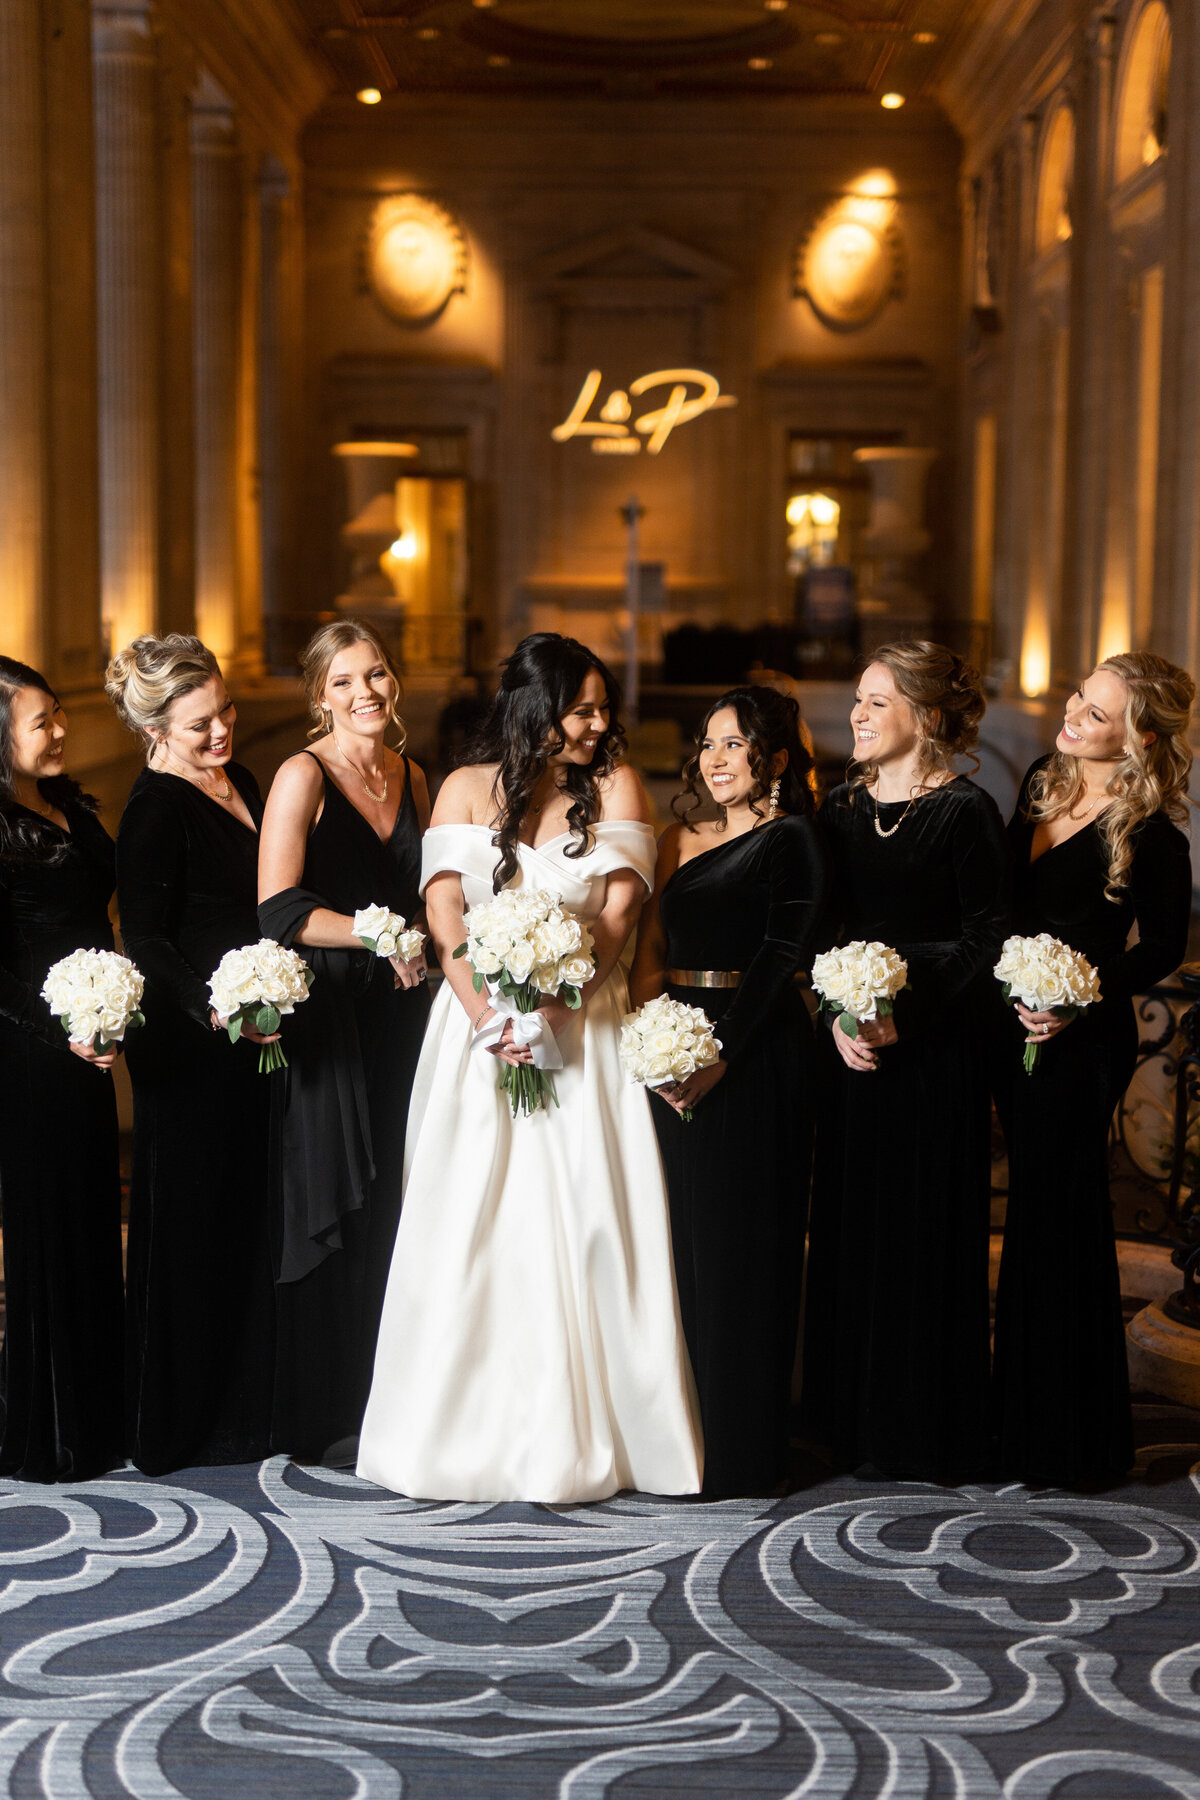 25-Hilton-Chicago-Wedding-Photos-Lauren-Ashlely-Studios